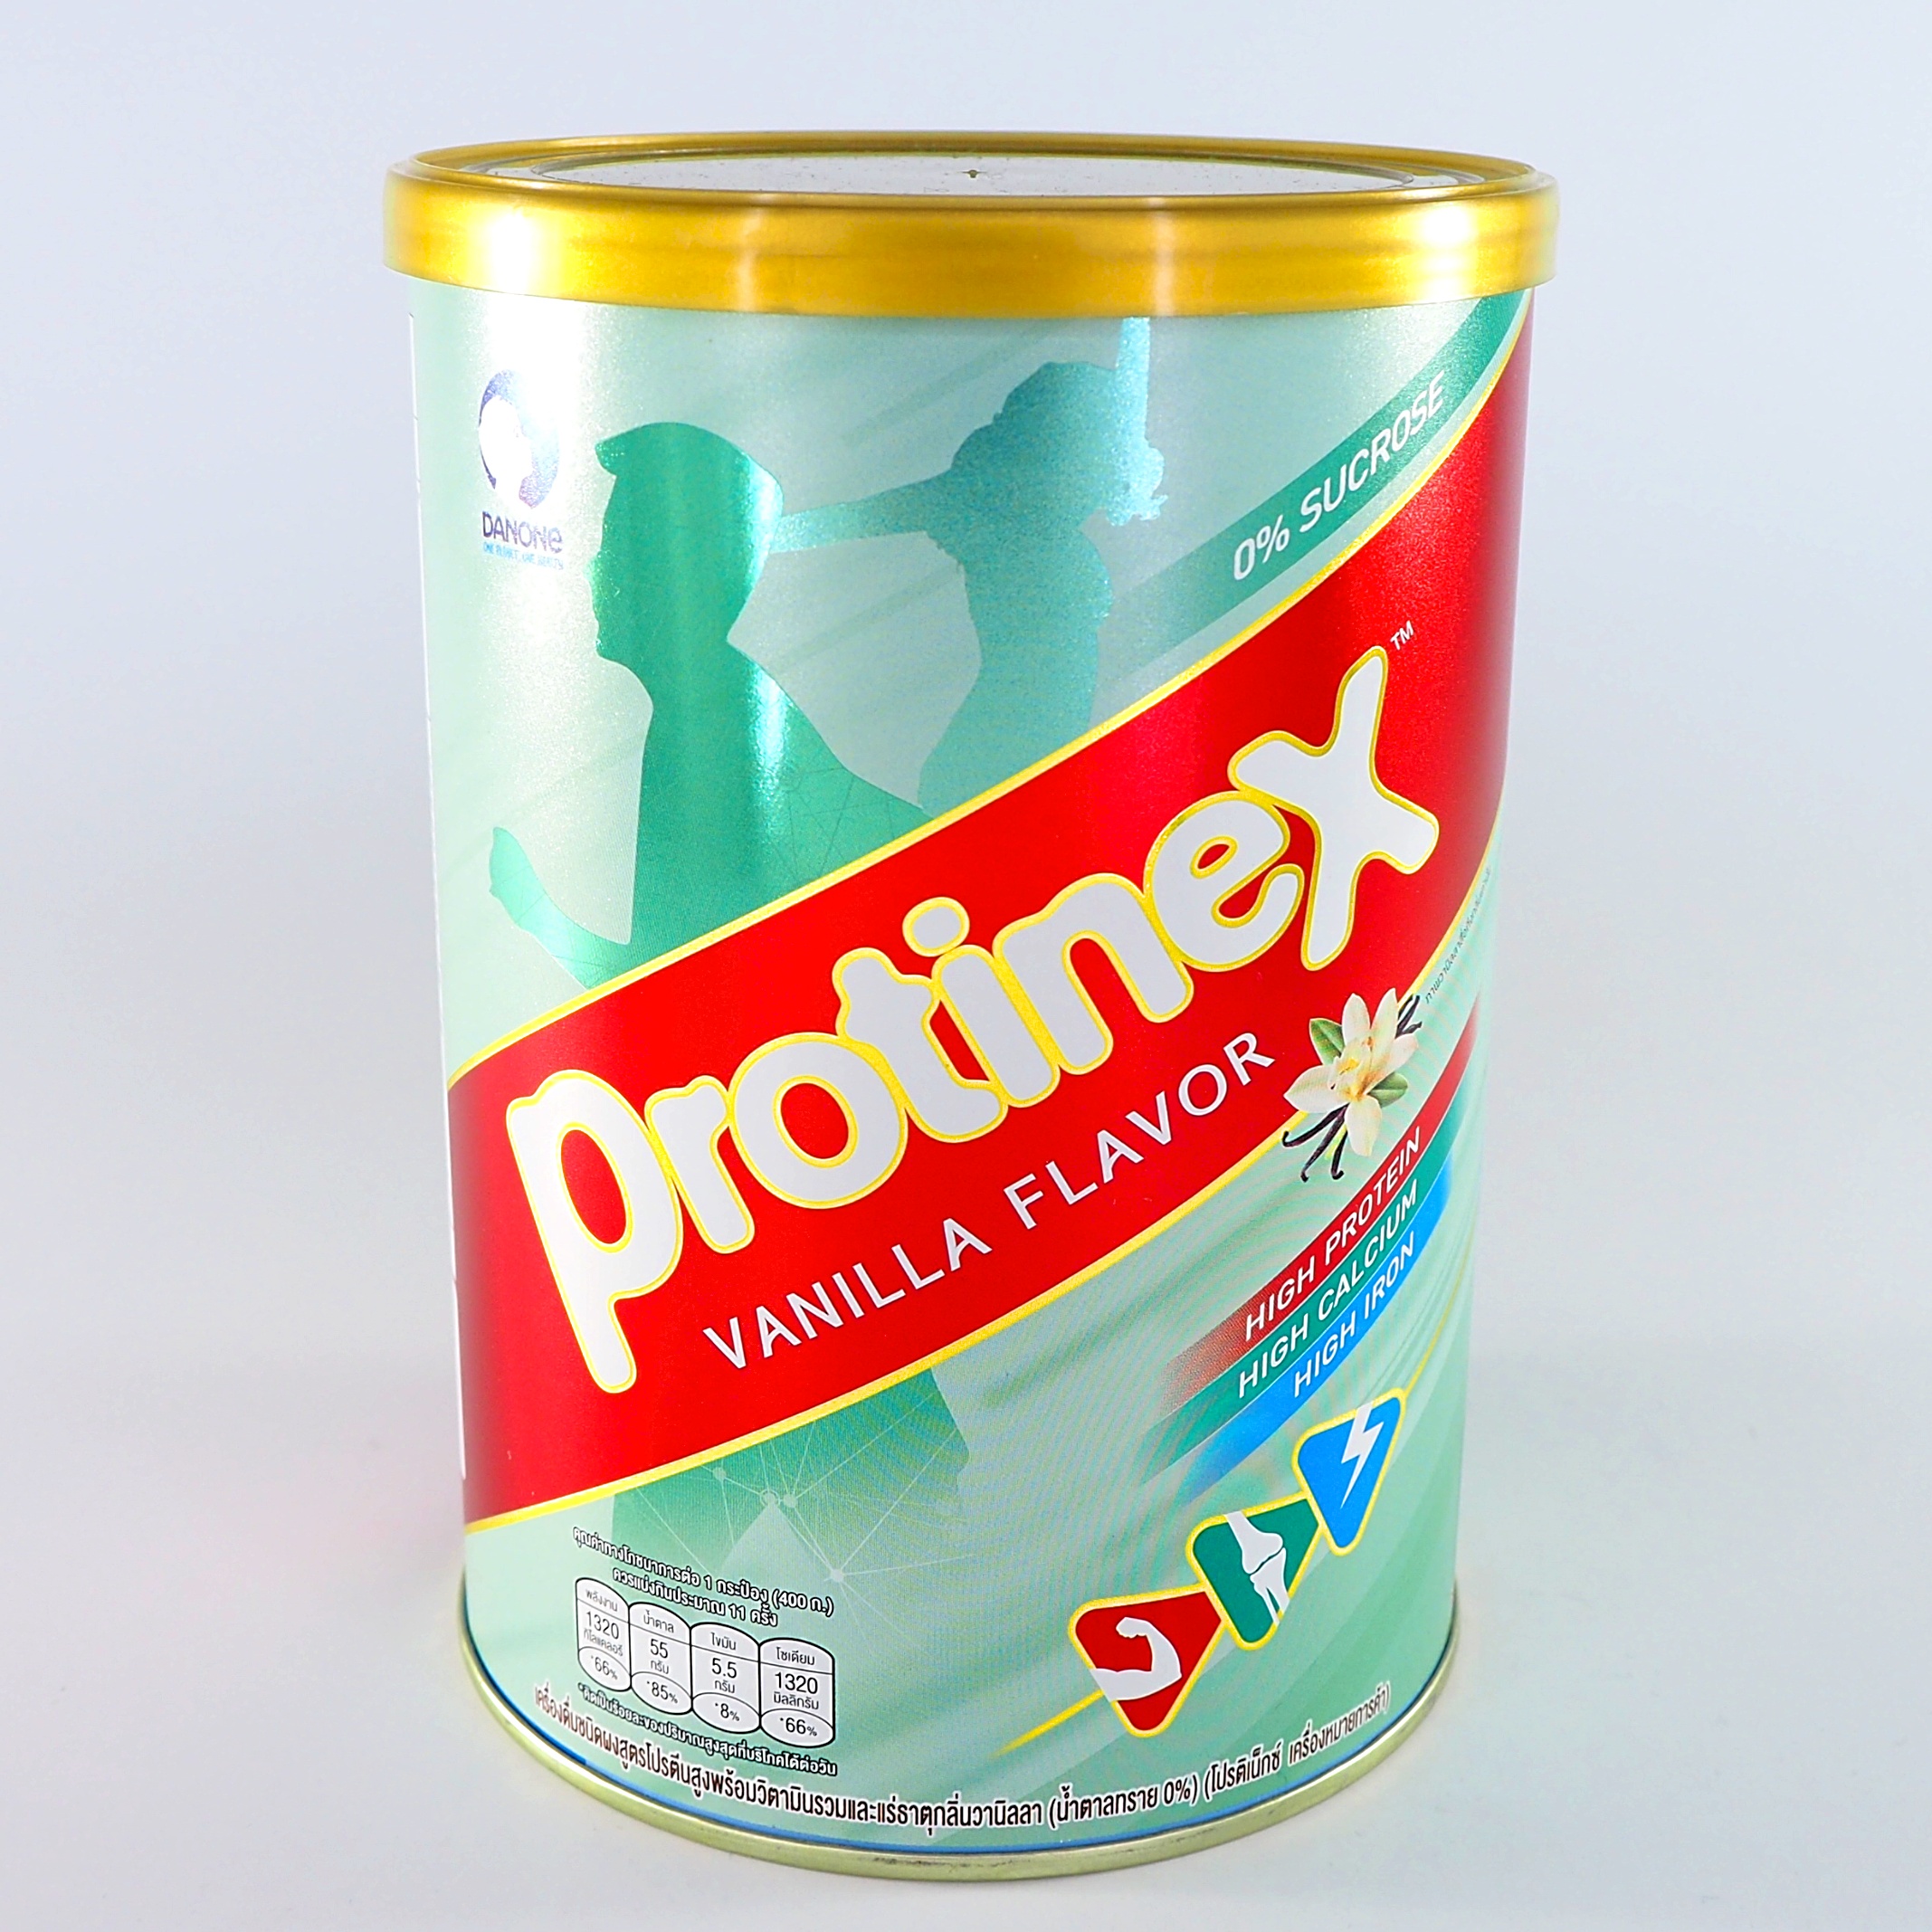 Protinex Vanilla โปรติเน็กซ์ วนิลา 400 g เครื่องดื่มชนิดผงผสมโปรตีน กลิ่นวนิลา